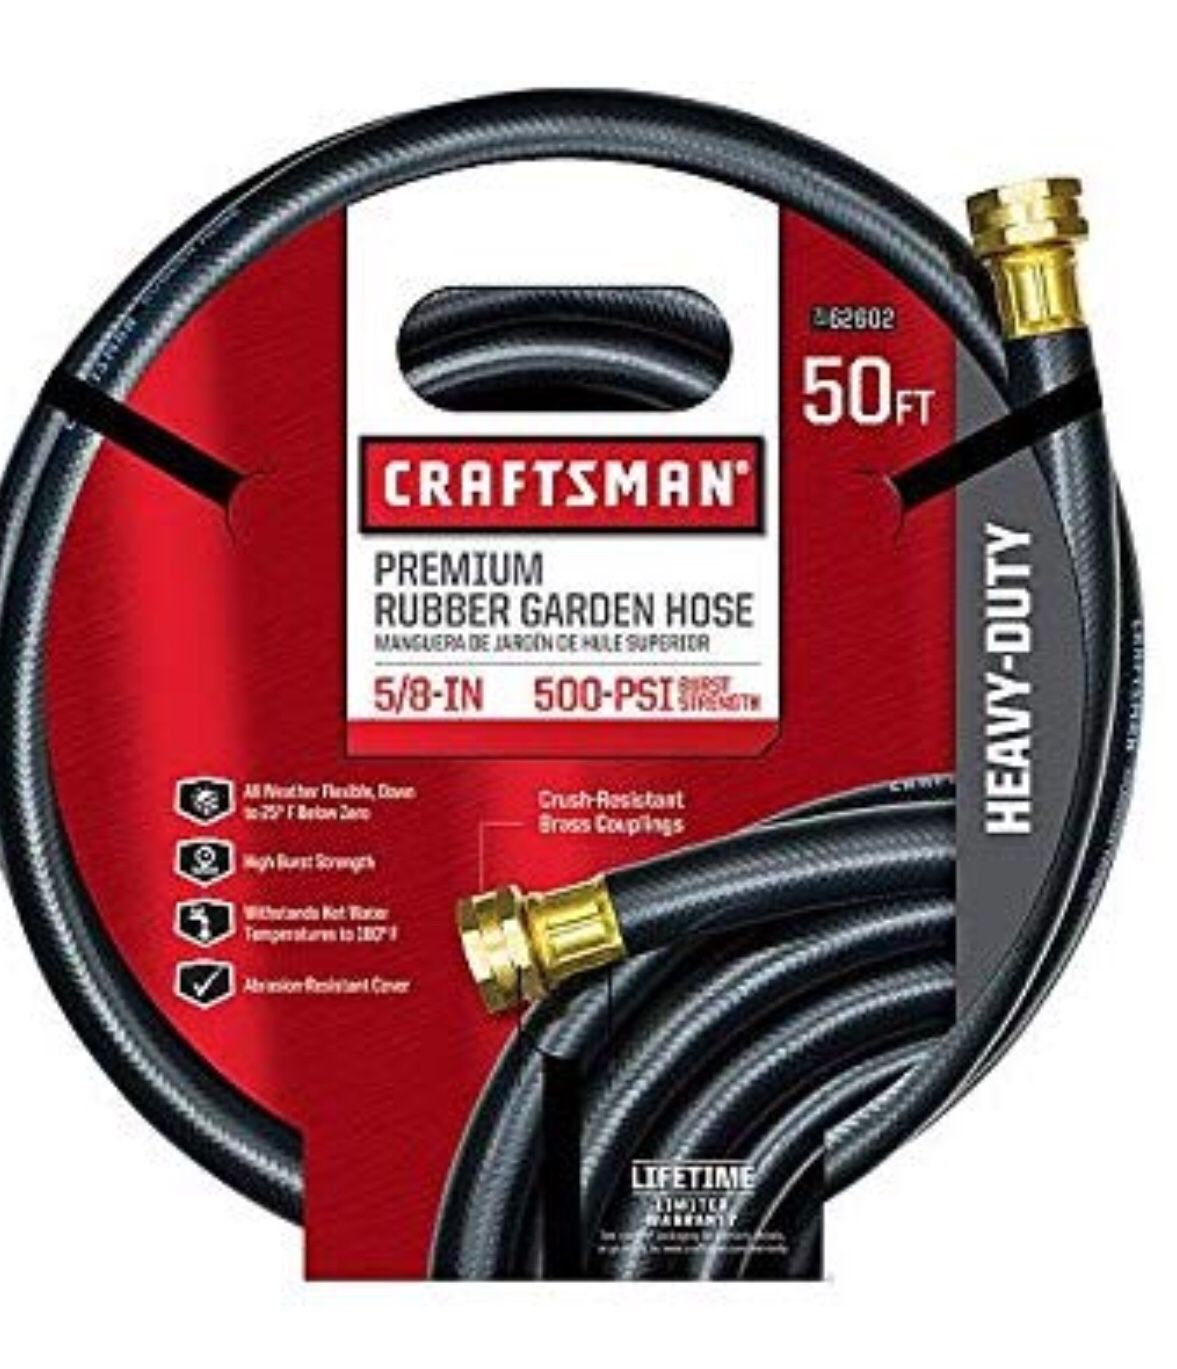 50 foot no kink craftsman hose w/ 2 brass nozzles & lawn sprinkler